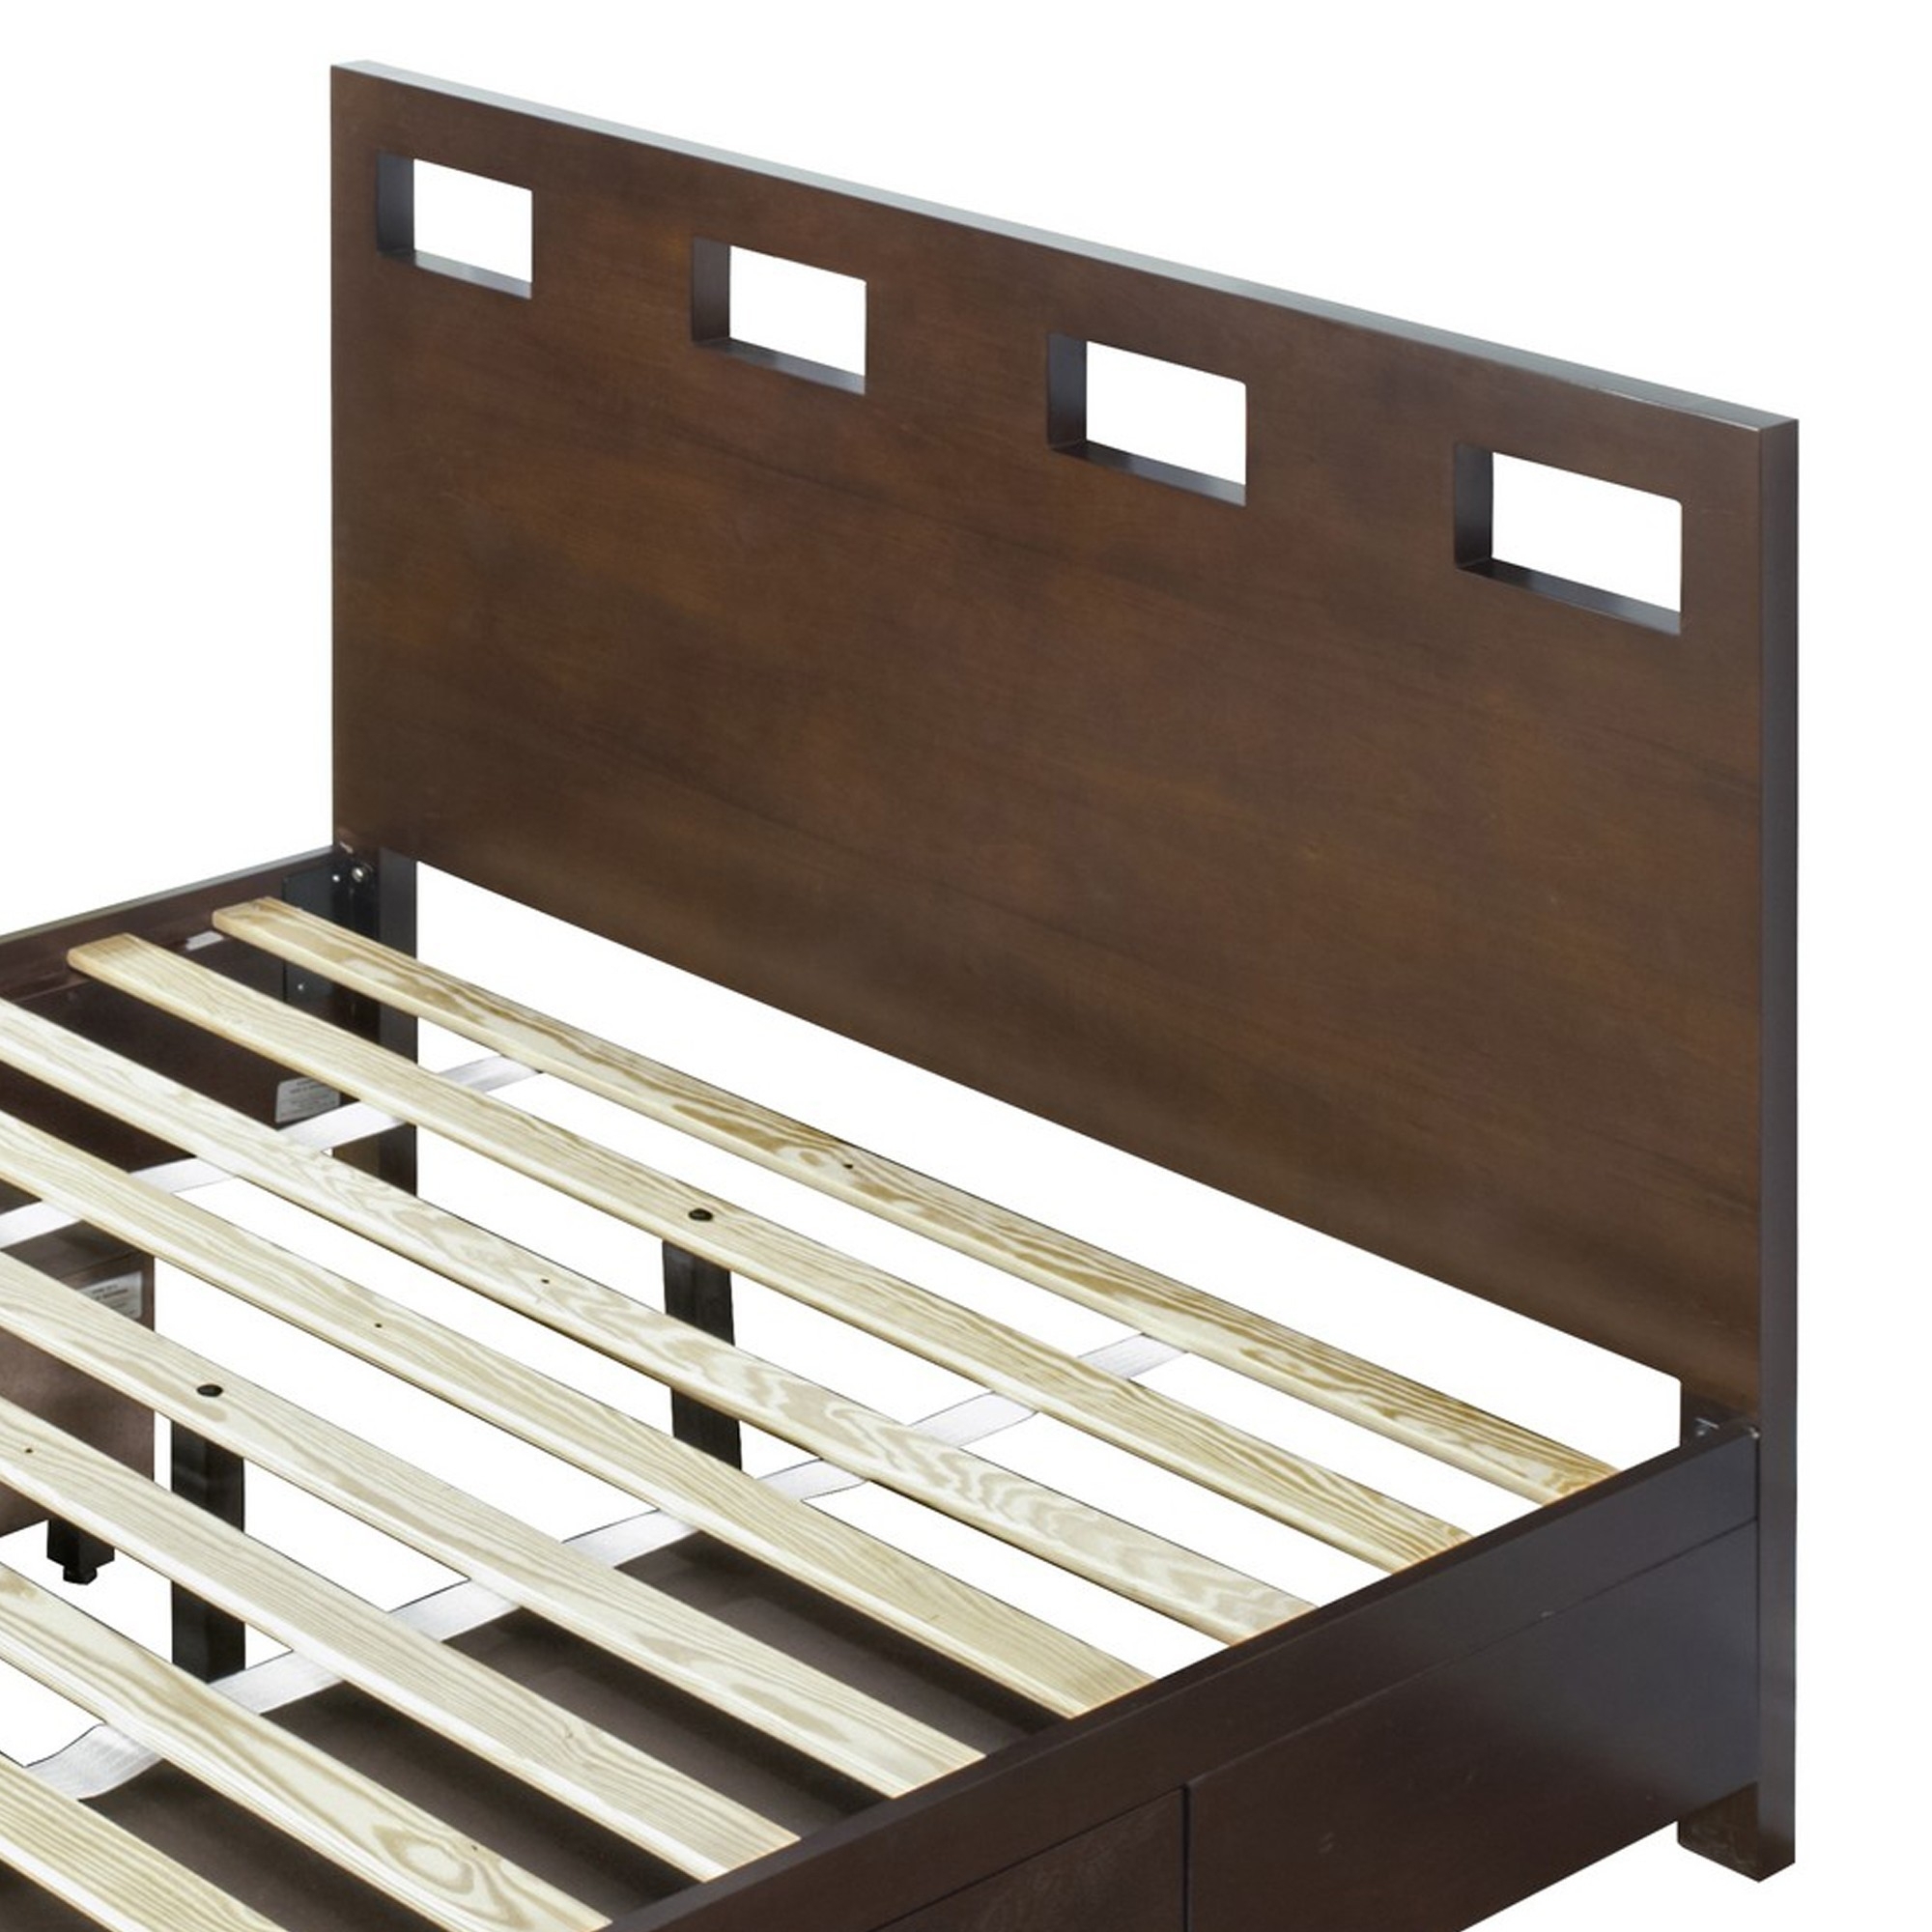 Yee Twin Storage Bed, Brown Wood, 4 Side Drawers, Cut Out Headboard Design- Saltoro Sherpi